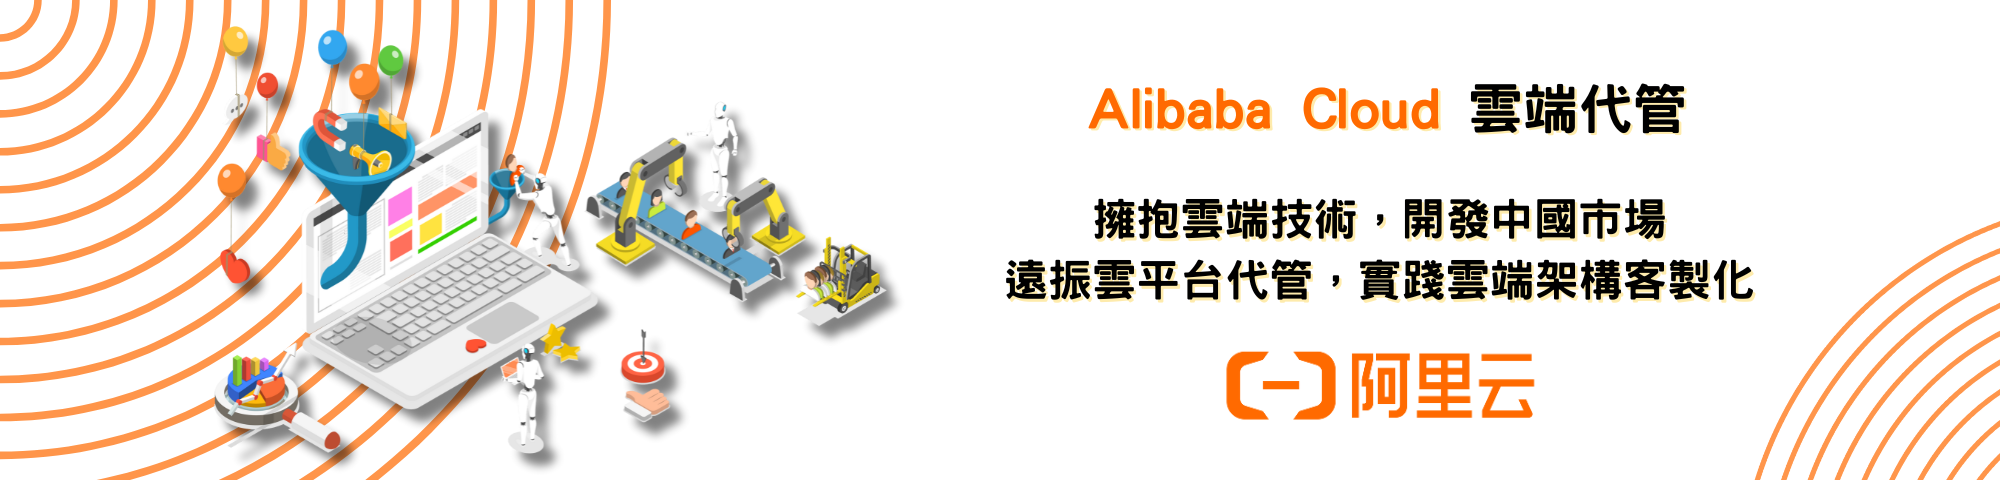 阿里雲 Alibaba Cloud 雲端代管服務